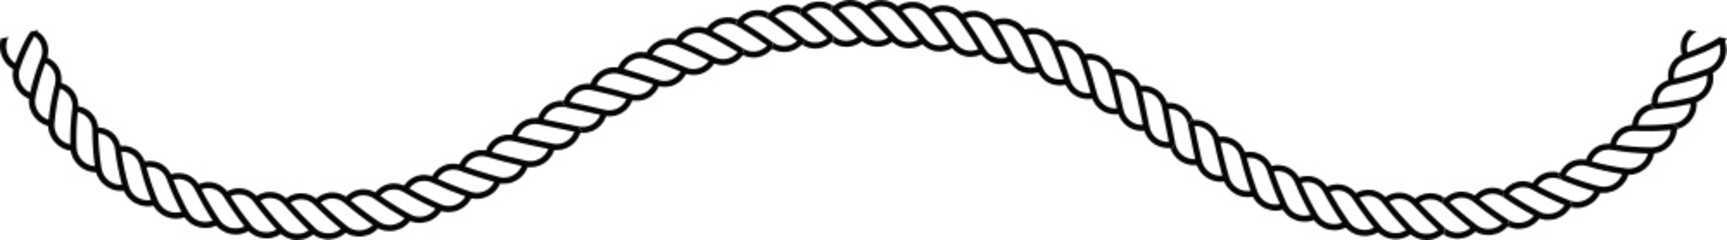 Rope clipart design illustration